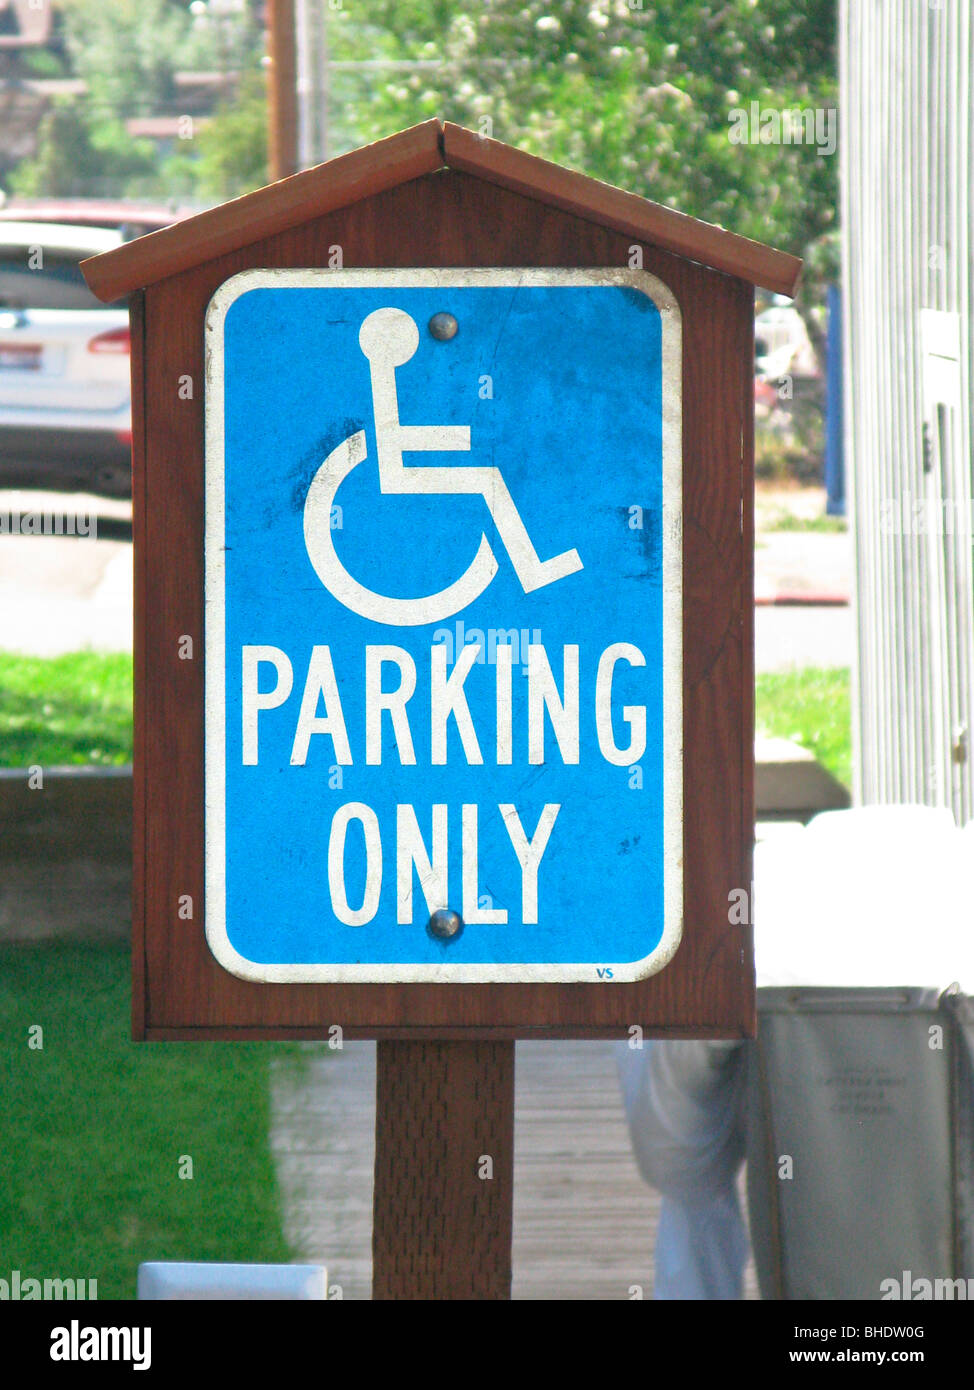 Handicap parking sign, Jackson, Wyoming, USA Banque D'Images